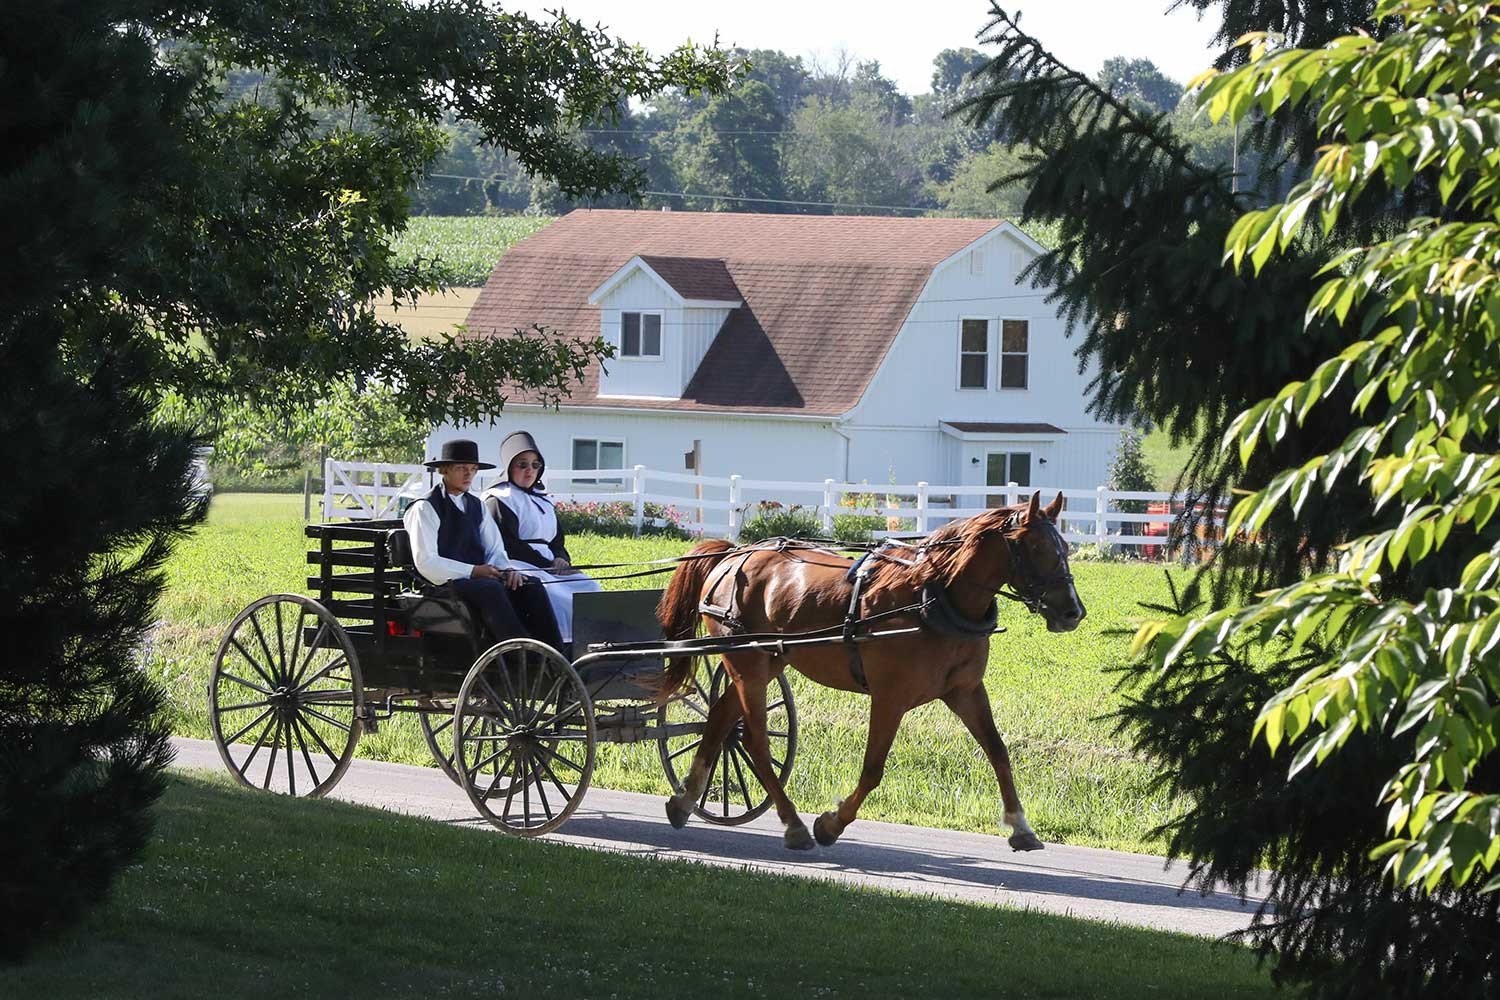 Do Amish Families Celebrate Christmas